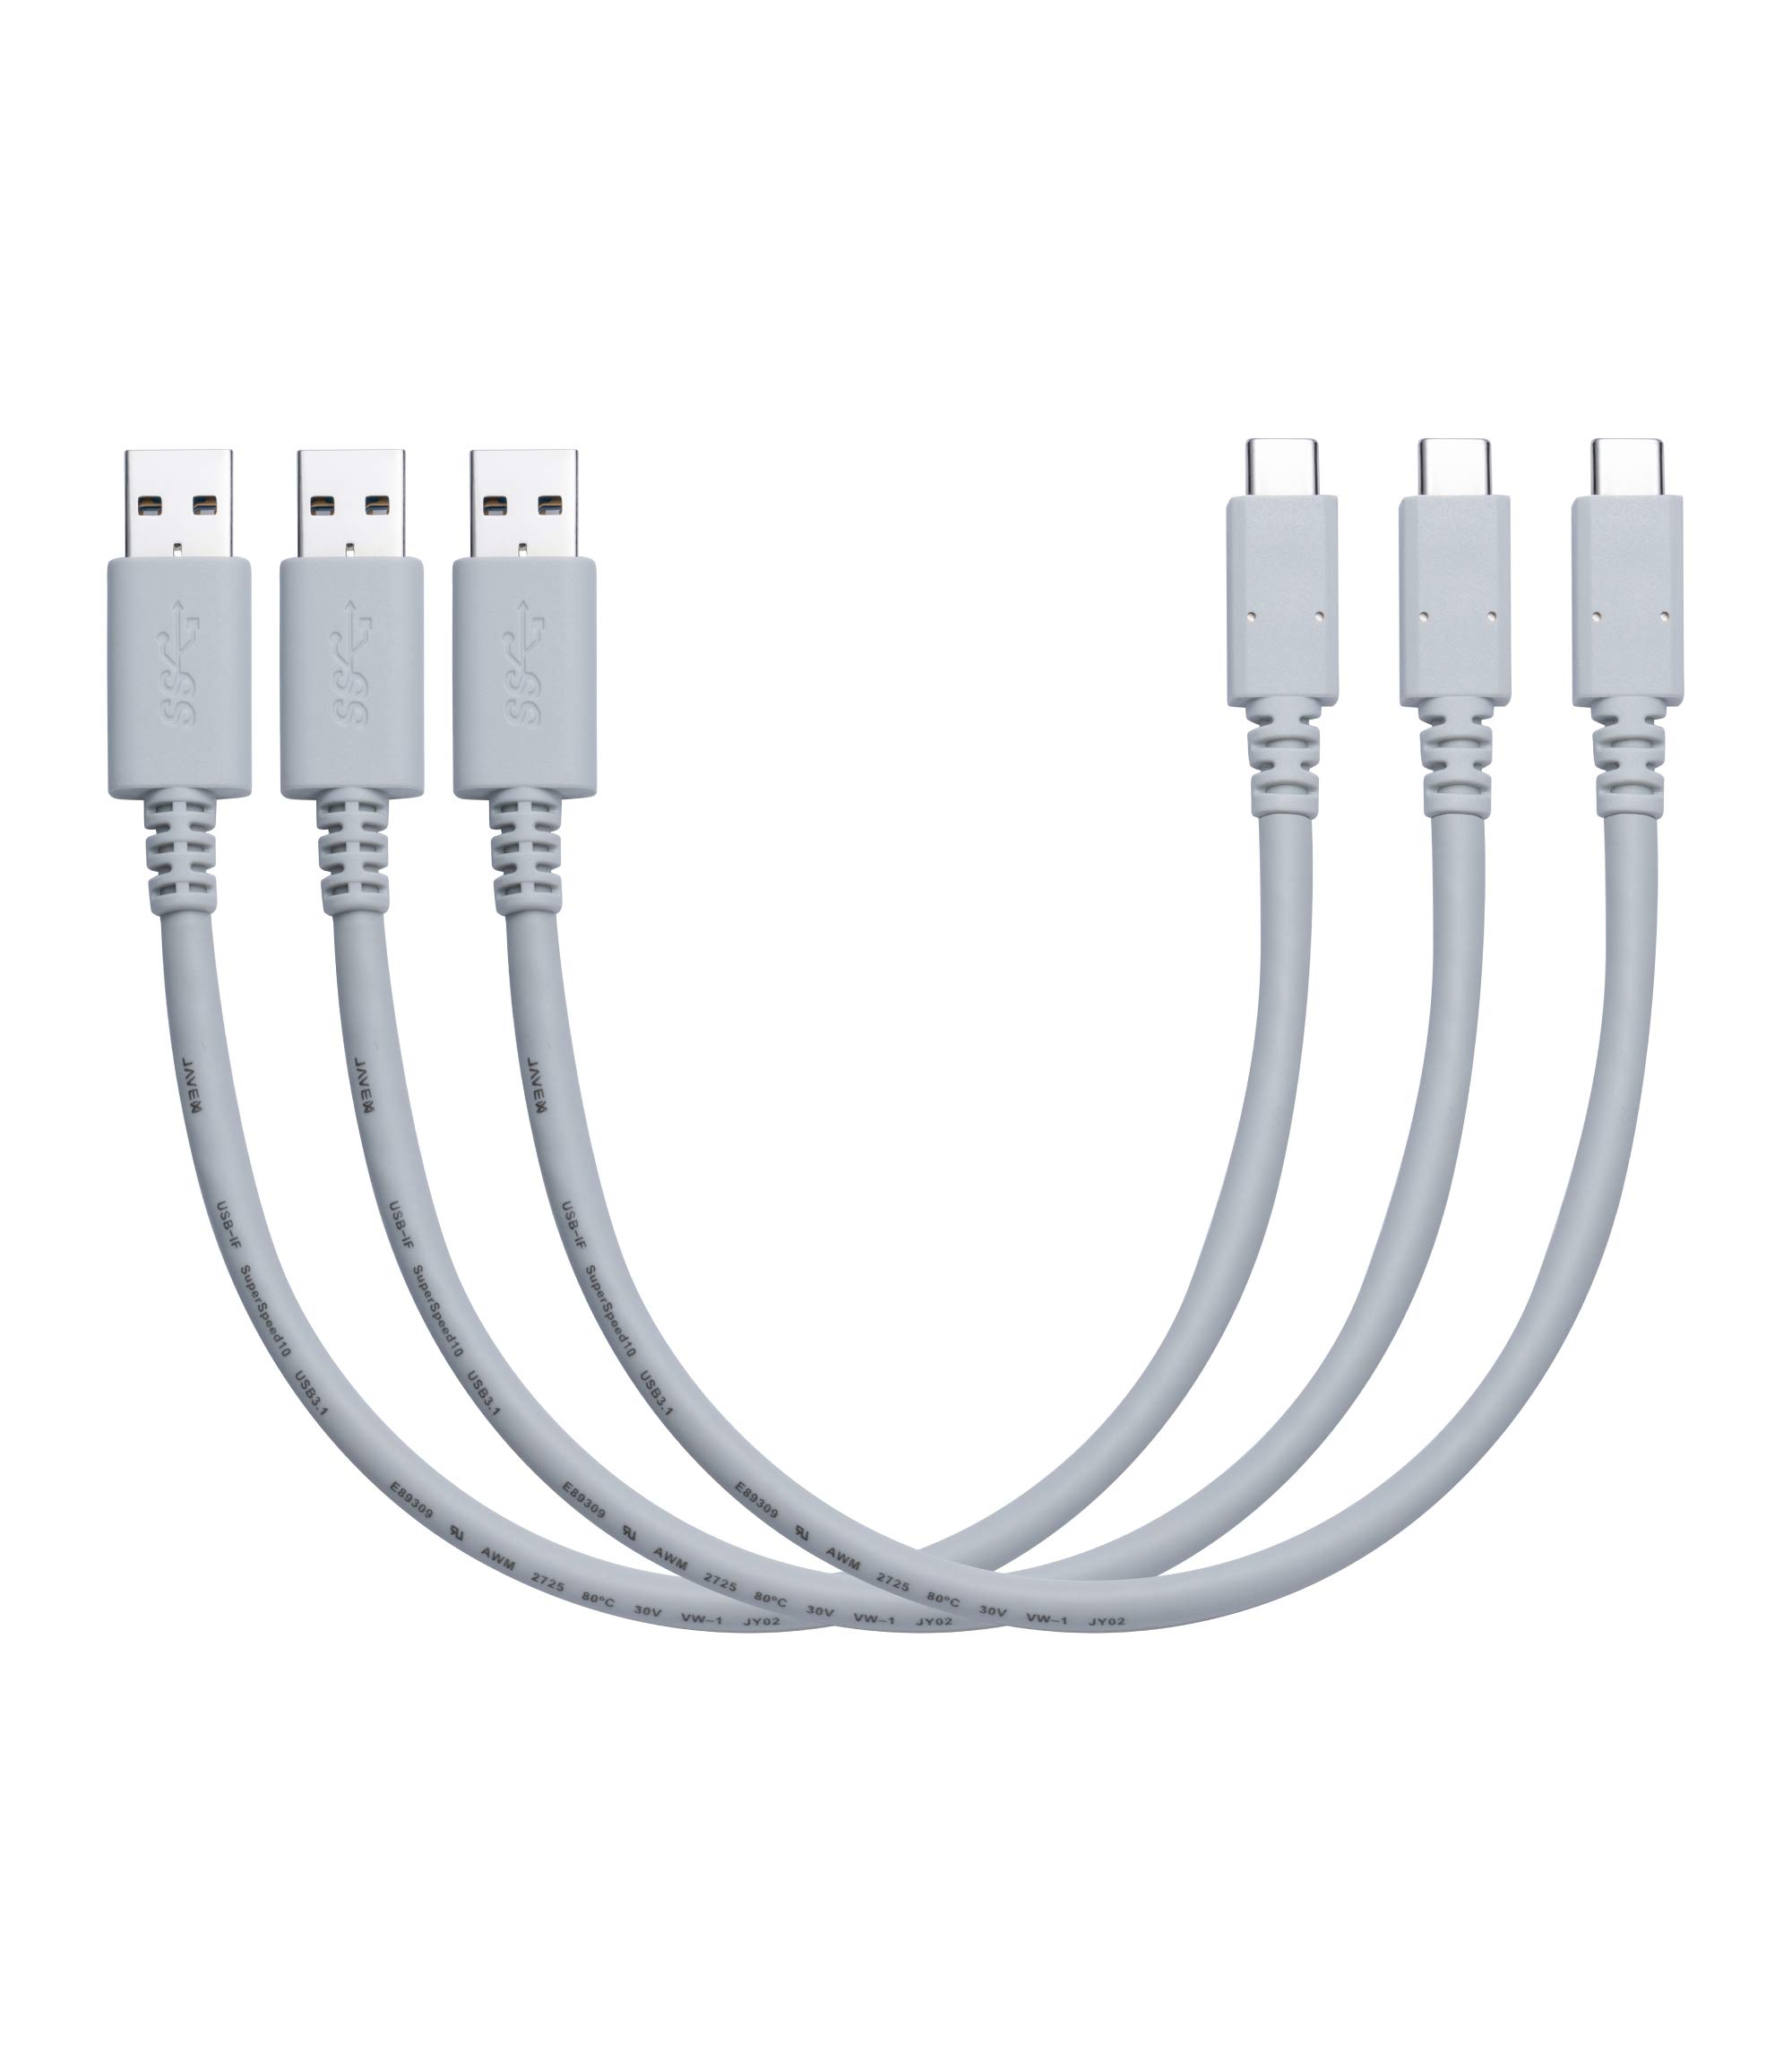 JAVEX [1FT, 3er Pack] USB 3.1 Gen2 10 Gpbs Typ C zu A-Kabel, Sicherheit UL-gelistet, Cool Grey